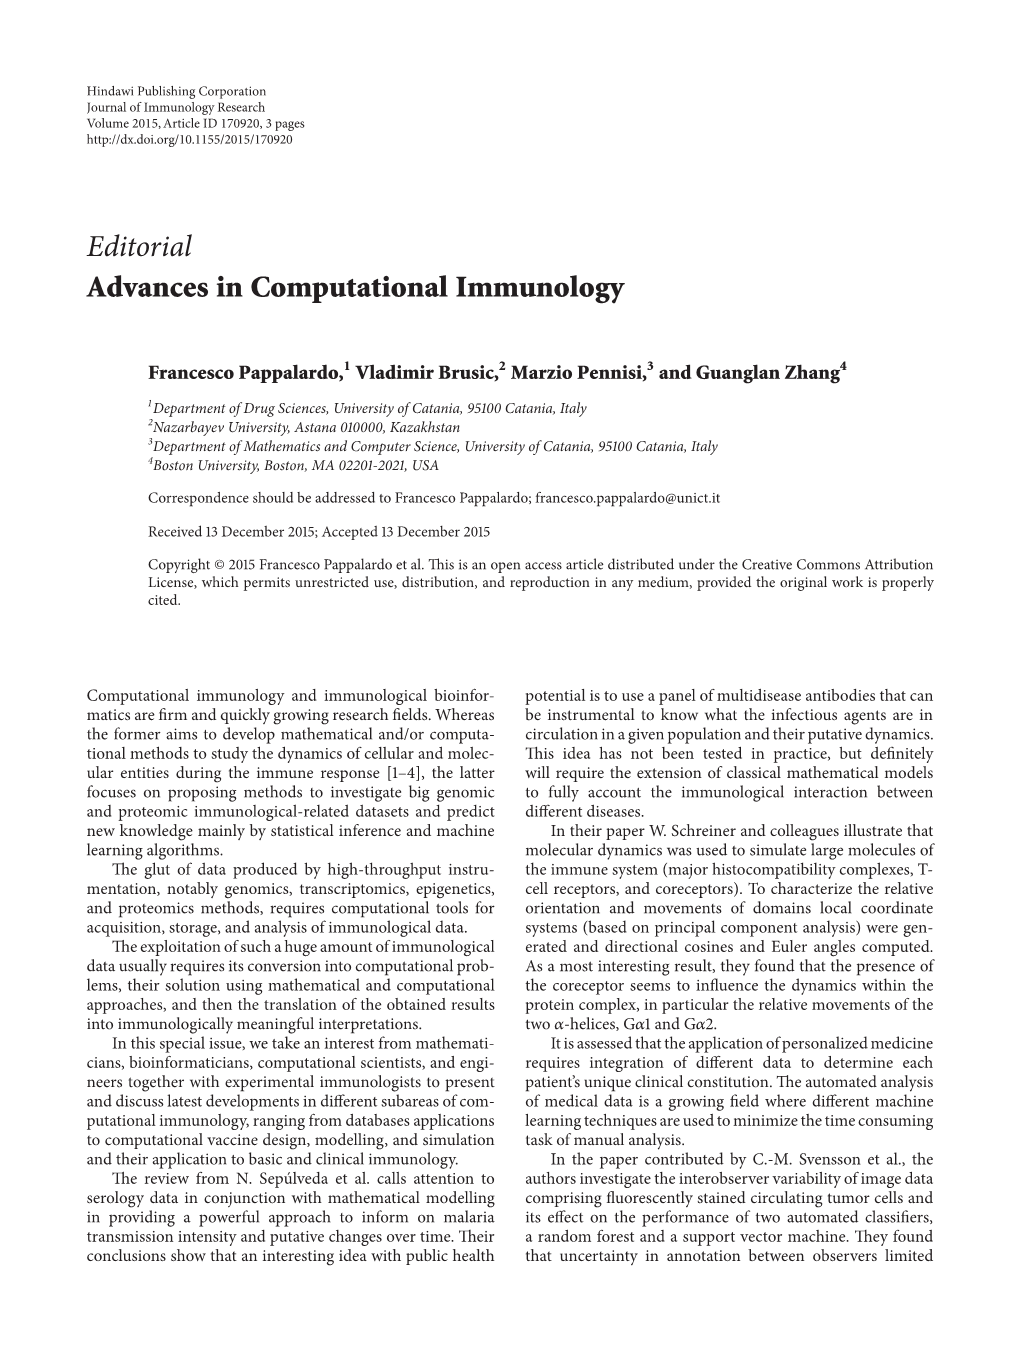 Editorial Advances in Computational Immunology